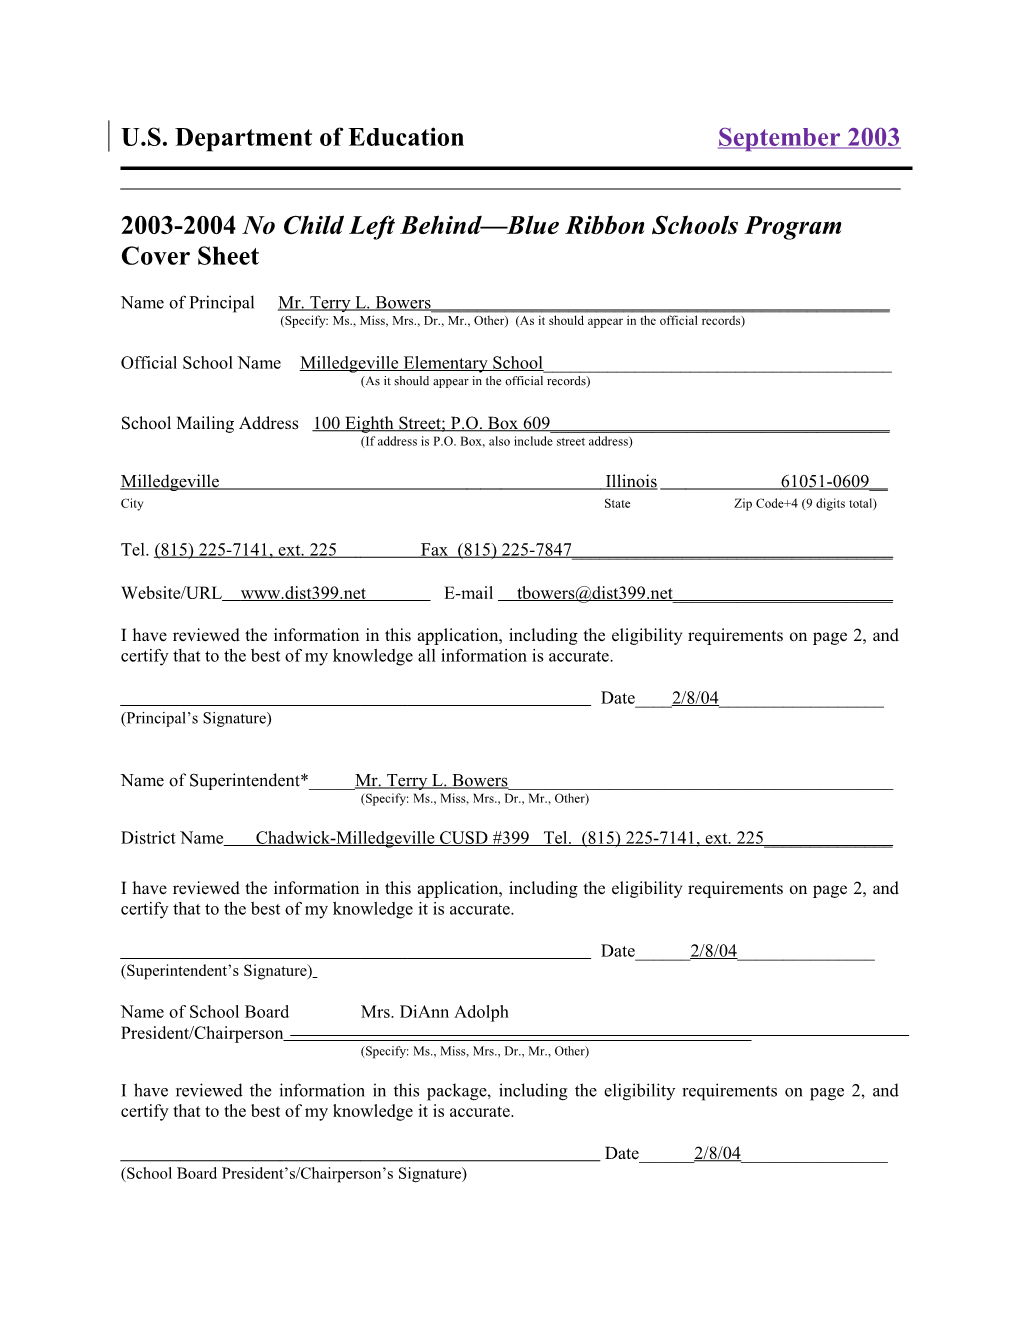 Milledgeville Elementary School 2004 No Child Left Behind-Blue Ribbon School Application